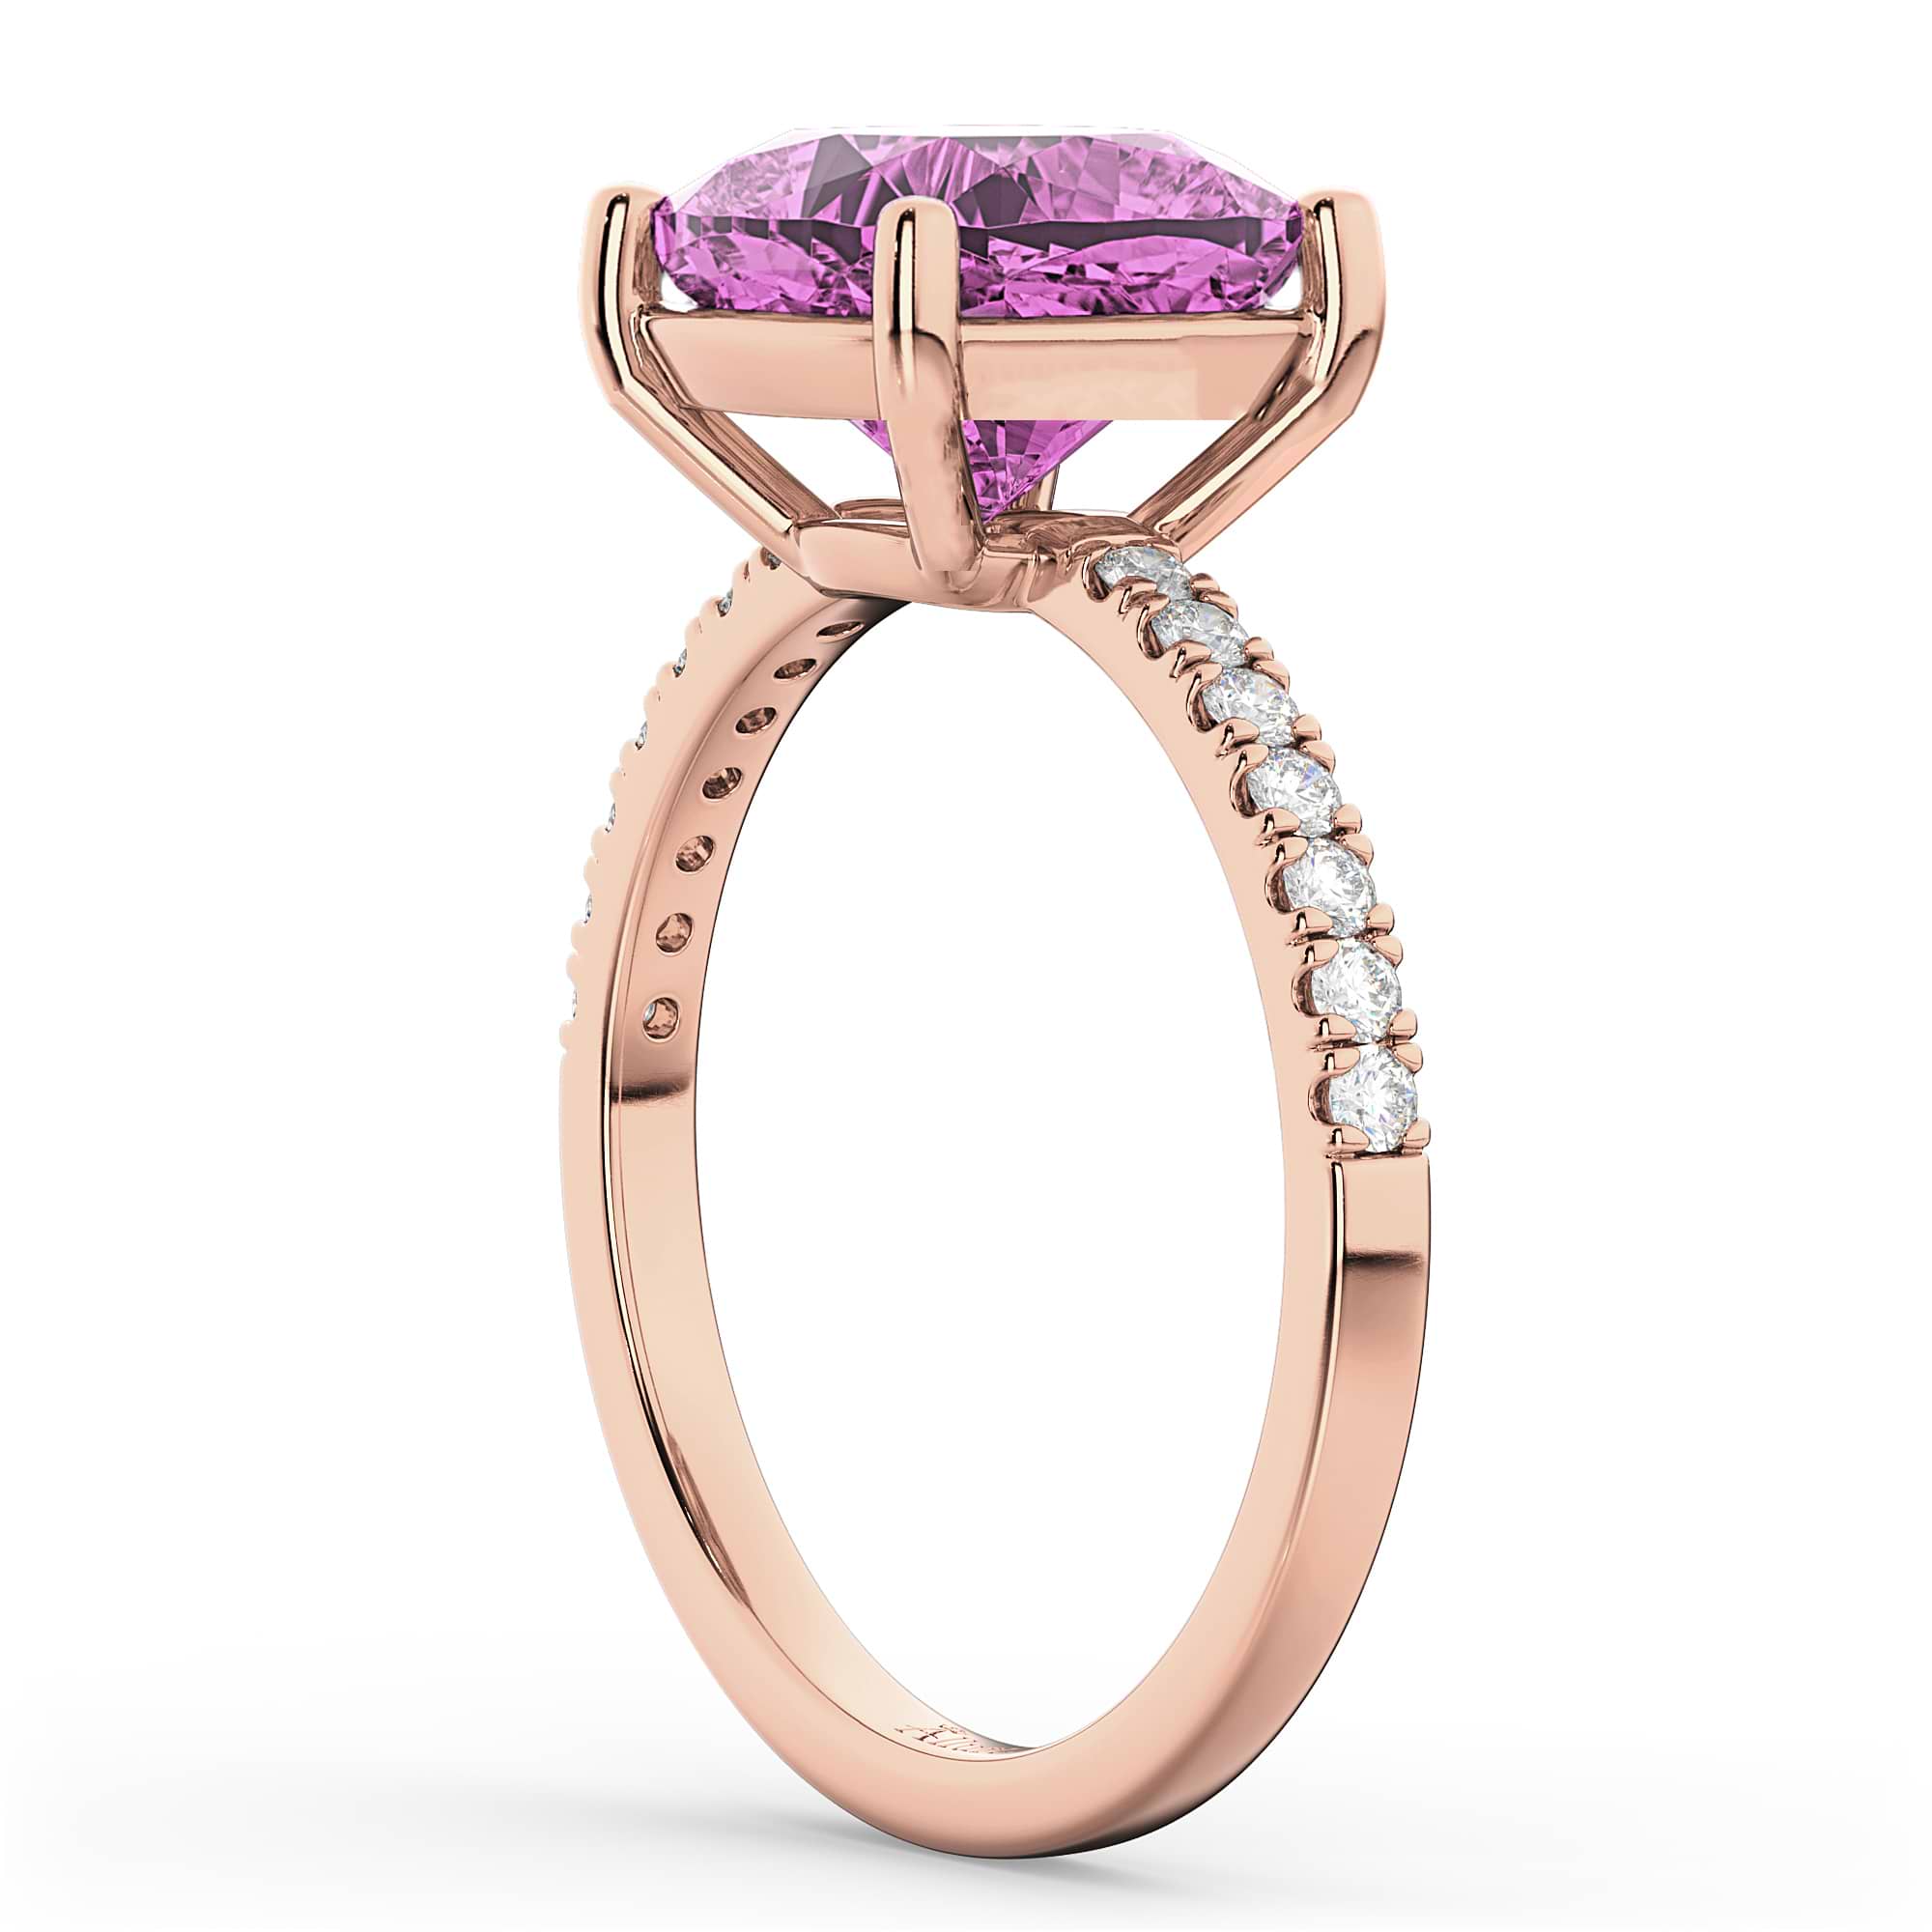 Cushion Cut Pink Sapphire & Diamond Engagement Ring 14k Rose Gold (2.81ct)